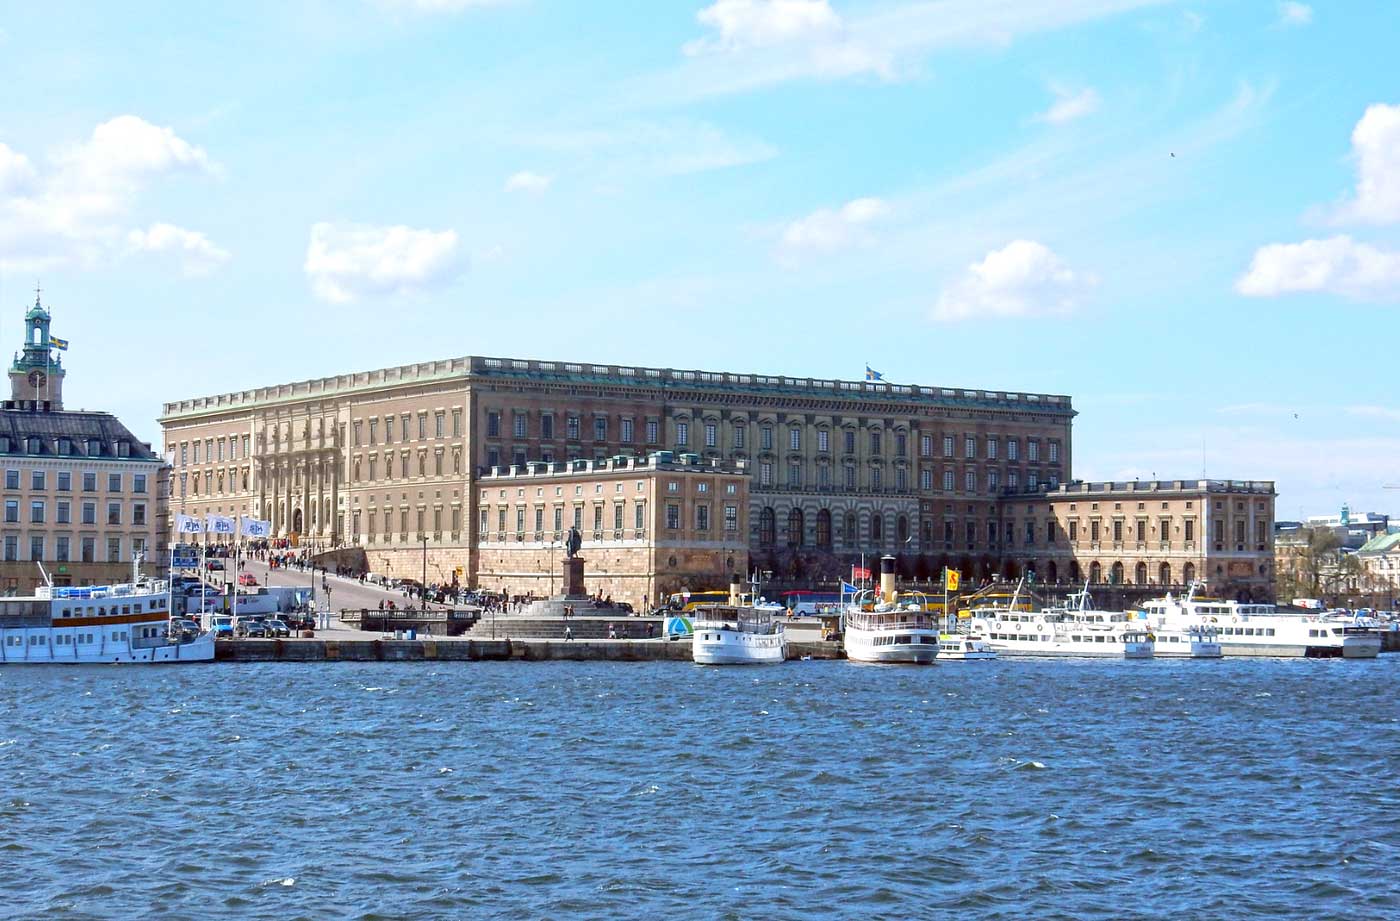 The Royal Palace (Stockholm)